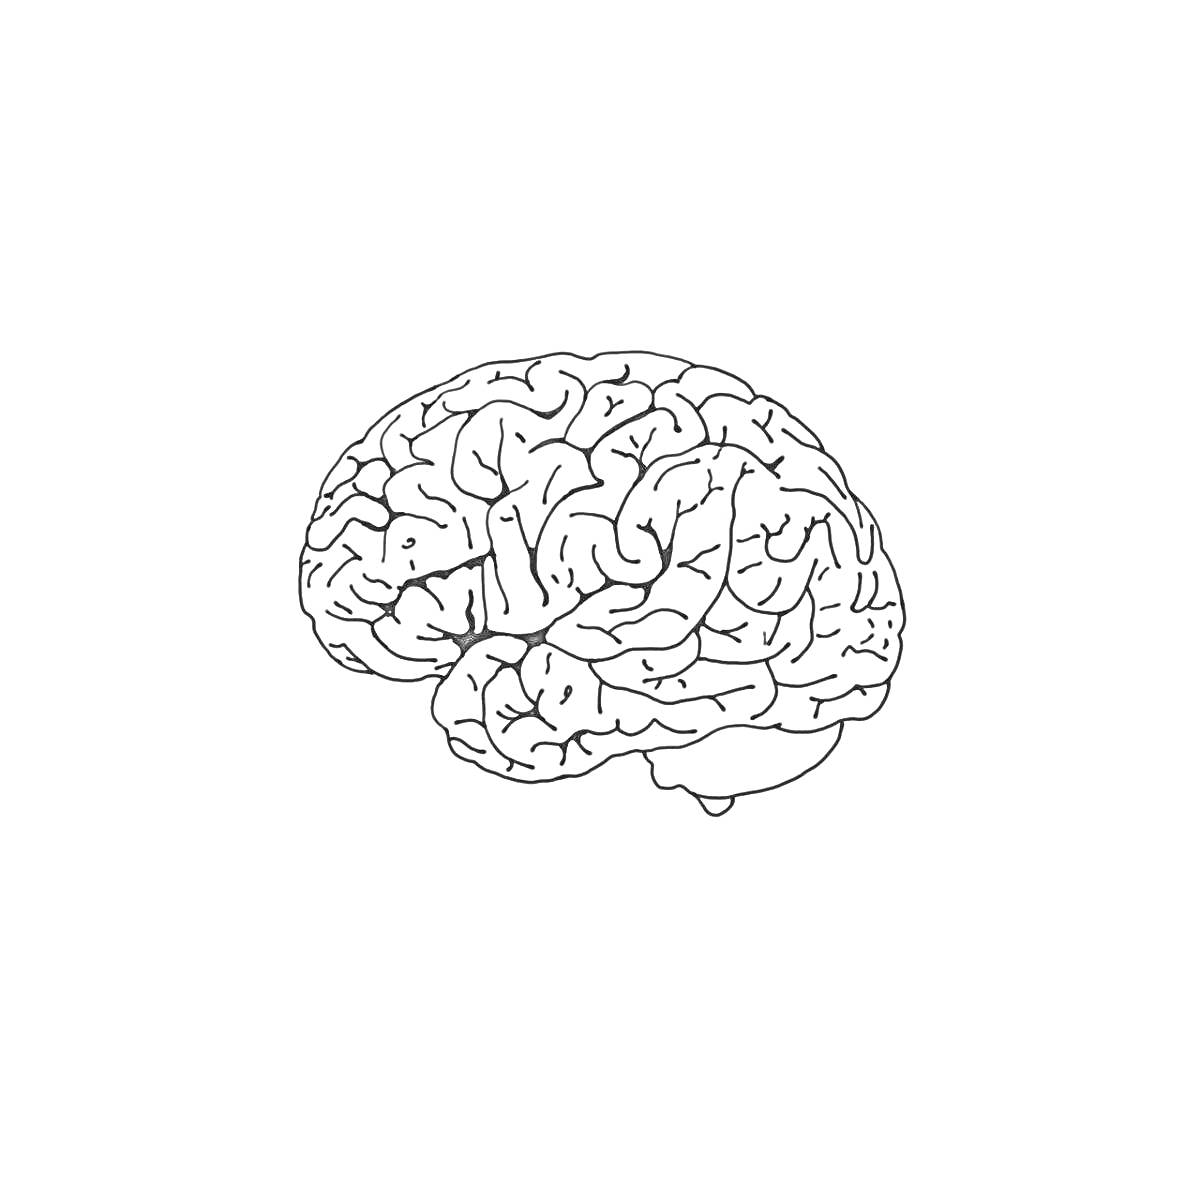 На раскраске изображено: Мозг, Анатомия, Обучение, Наука